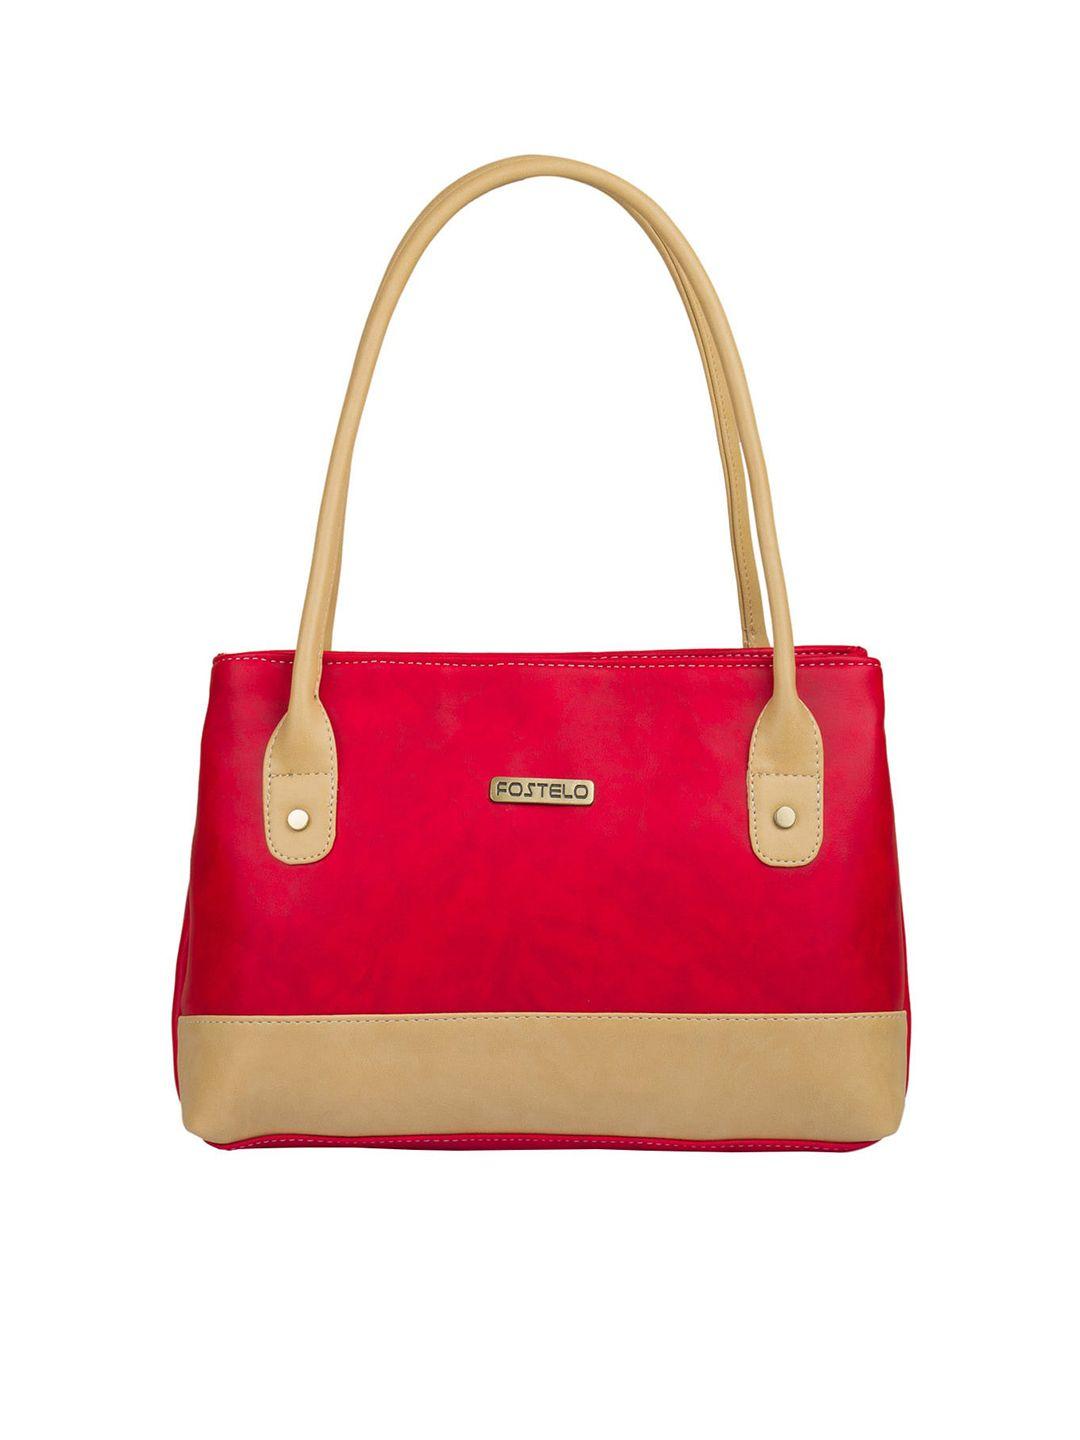 fostelo red & beige colourblocked shoulder bag